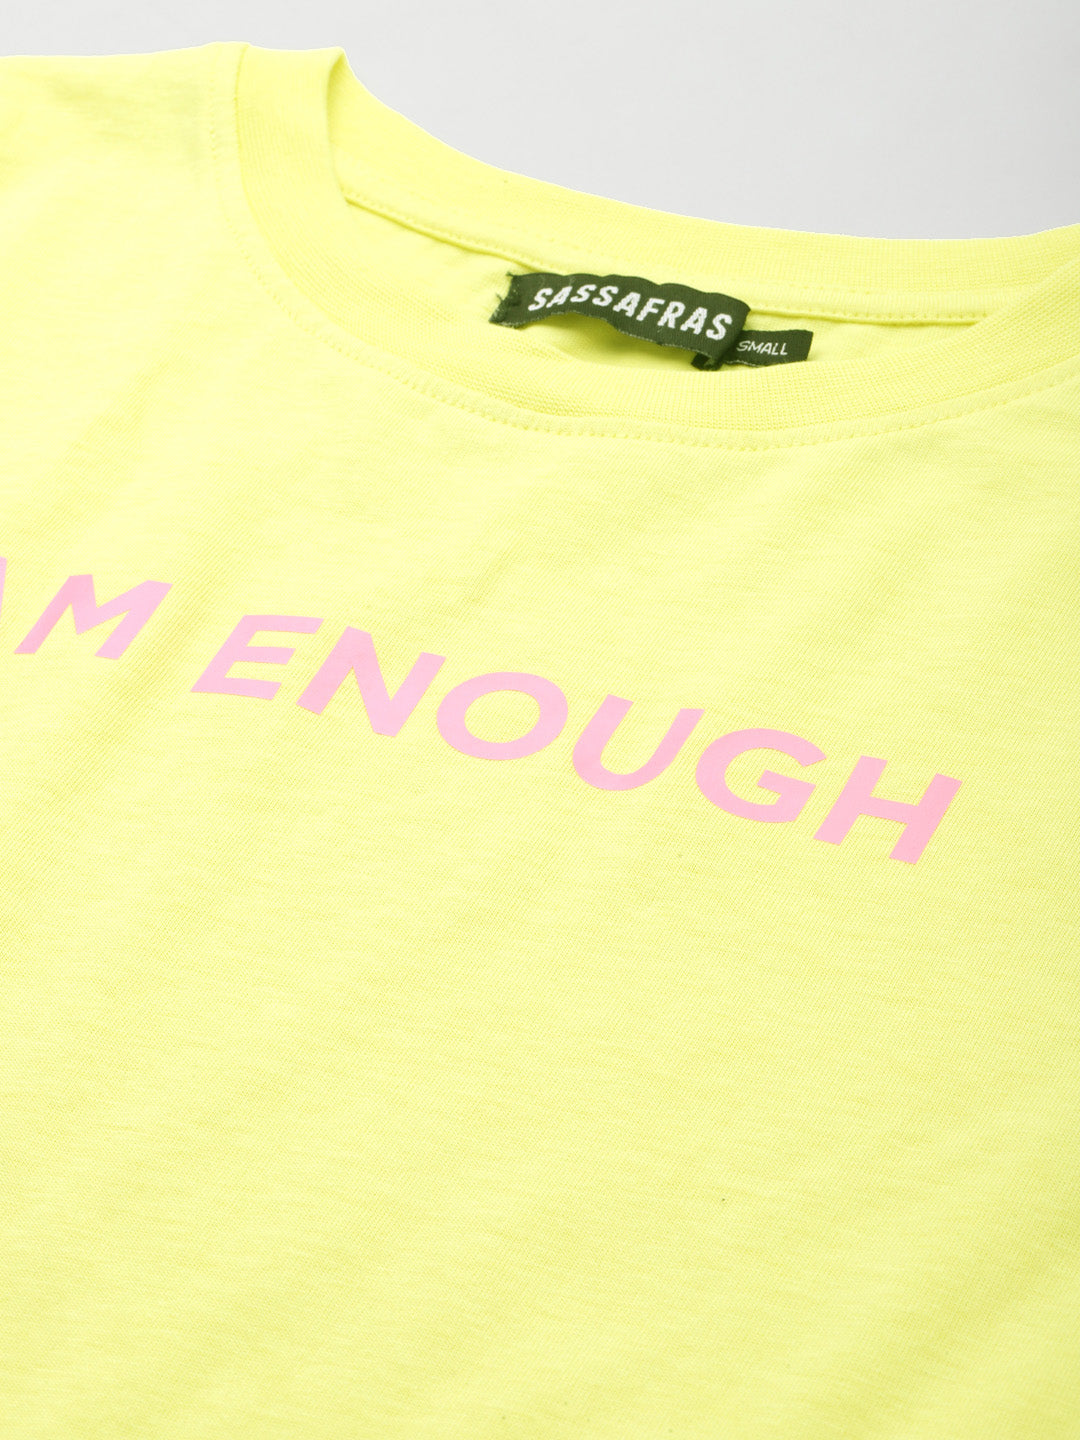 Yellow I-Am-Enough Crop Boxy T-Shirt